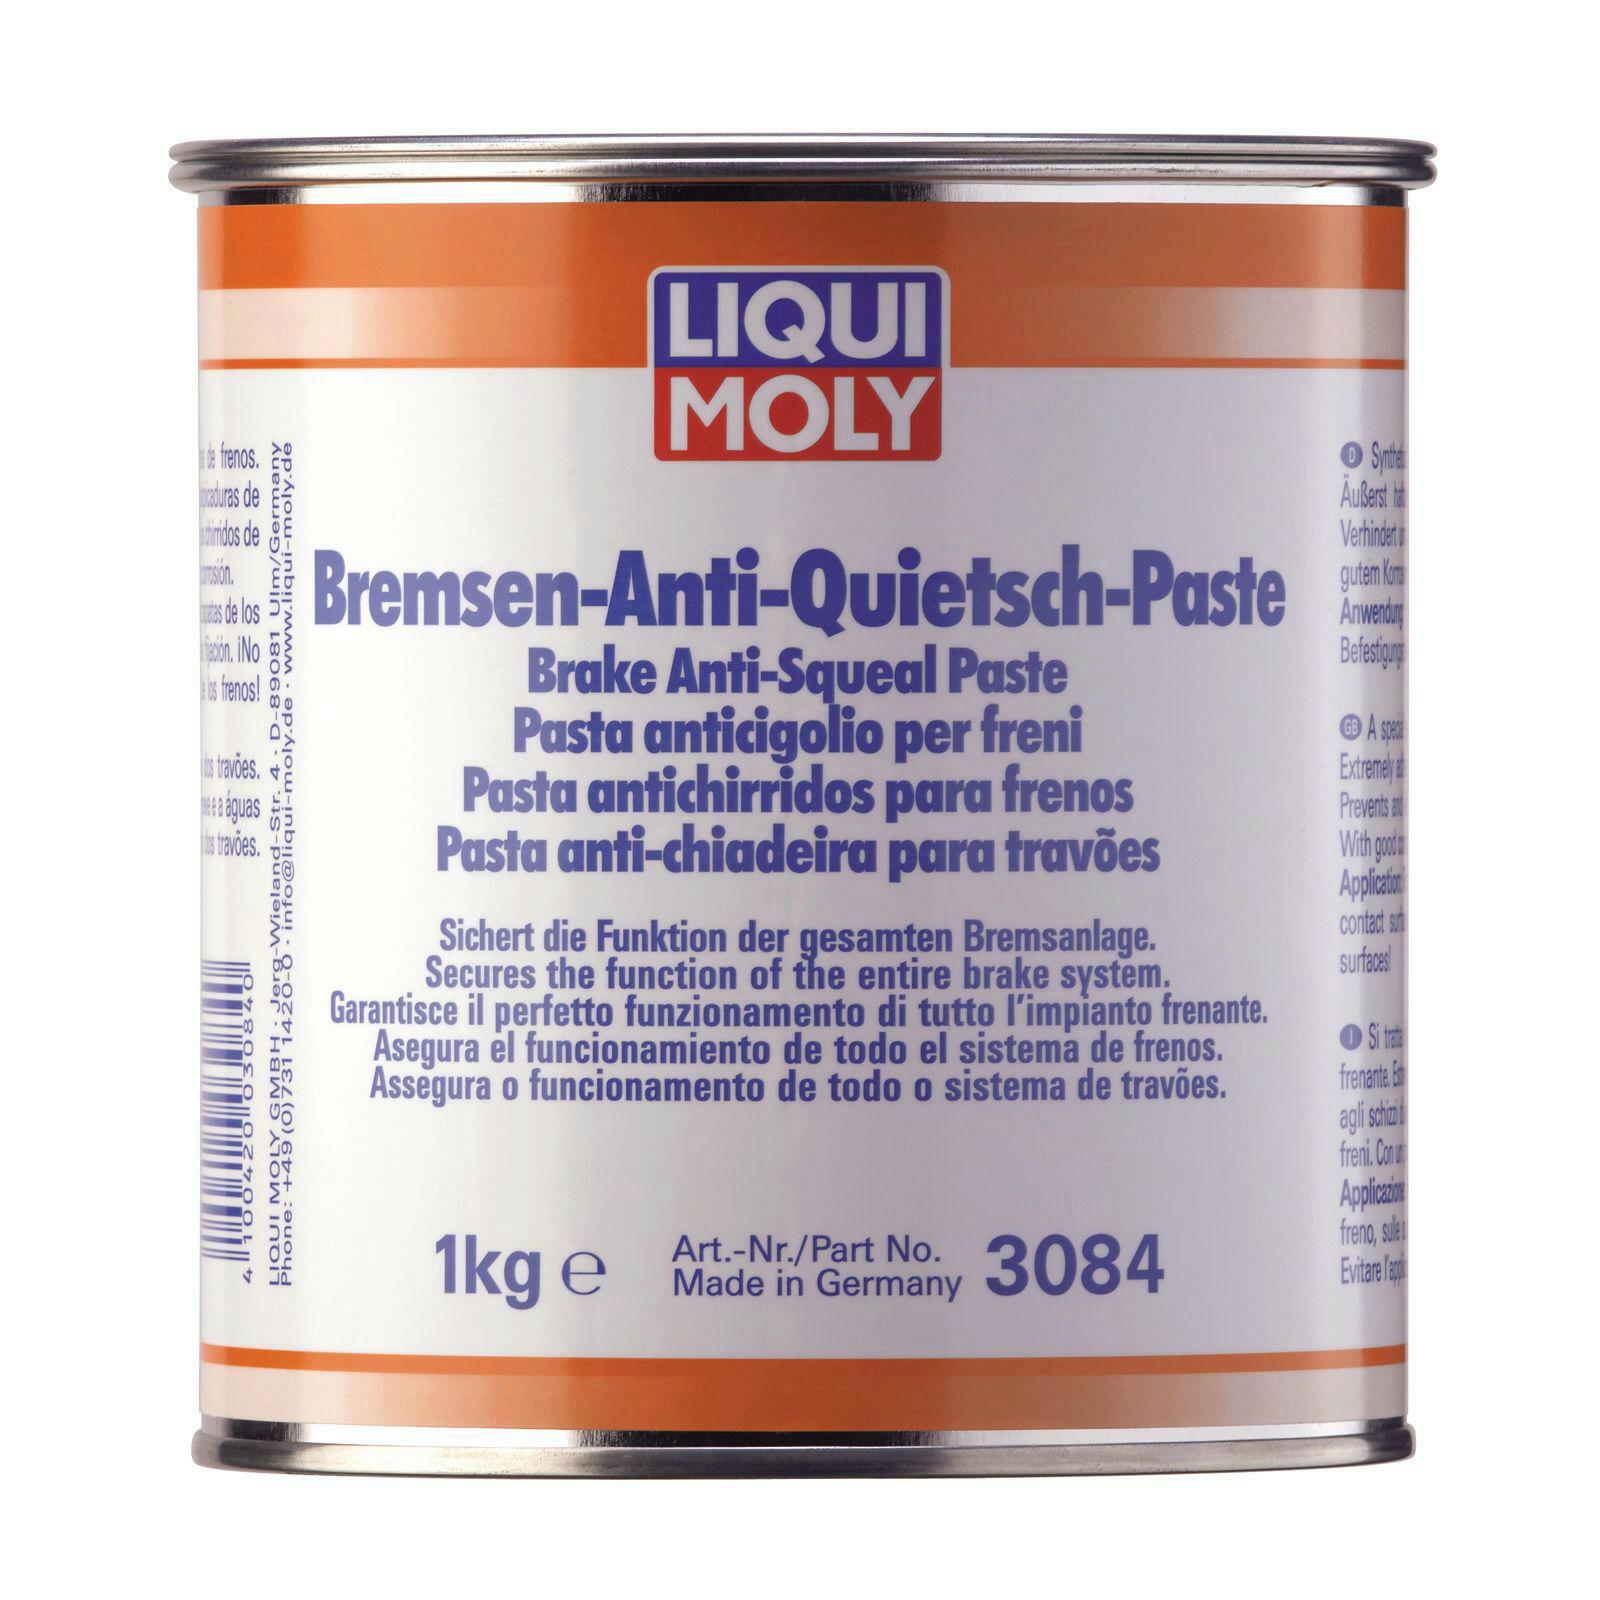 Liqui Moly Bremsen-Anti-Quitsch-Paste 1kg